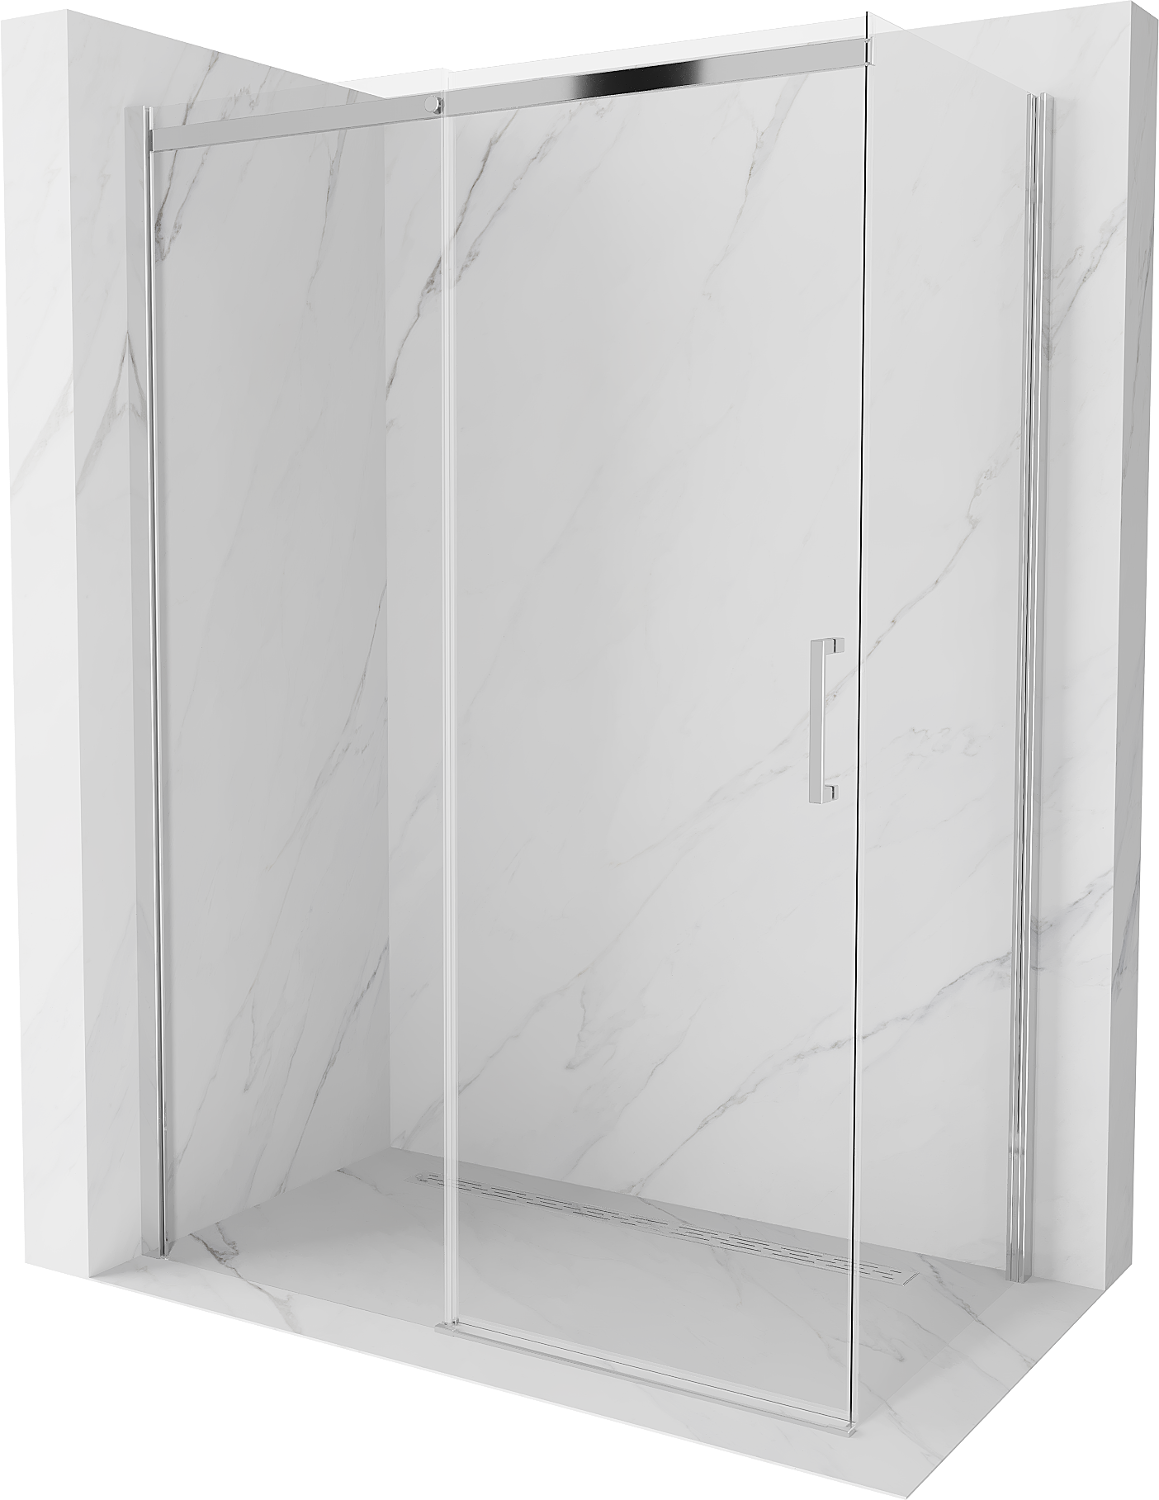 Mexen Omega kabina prysznicowa rozsuwana 160 x 70 cm, transparent, chrom - 825-160-070-01-00